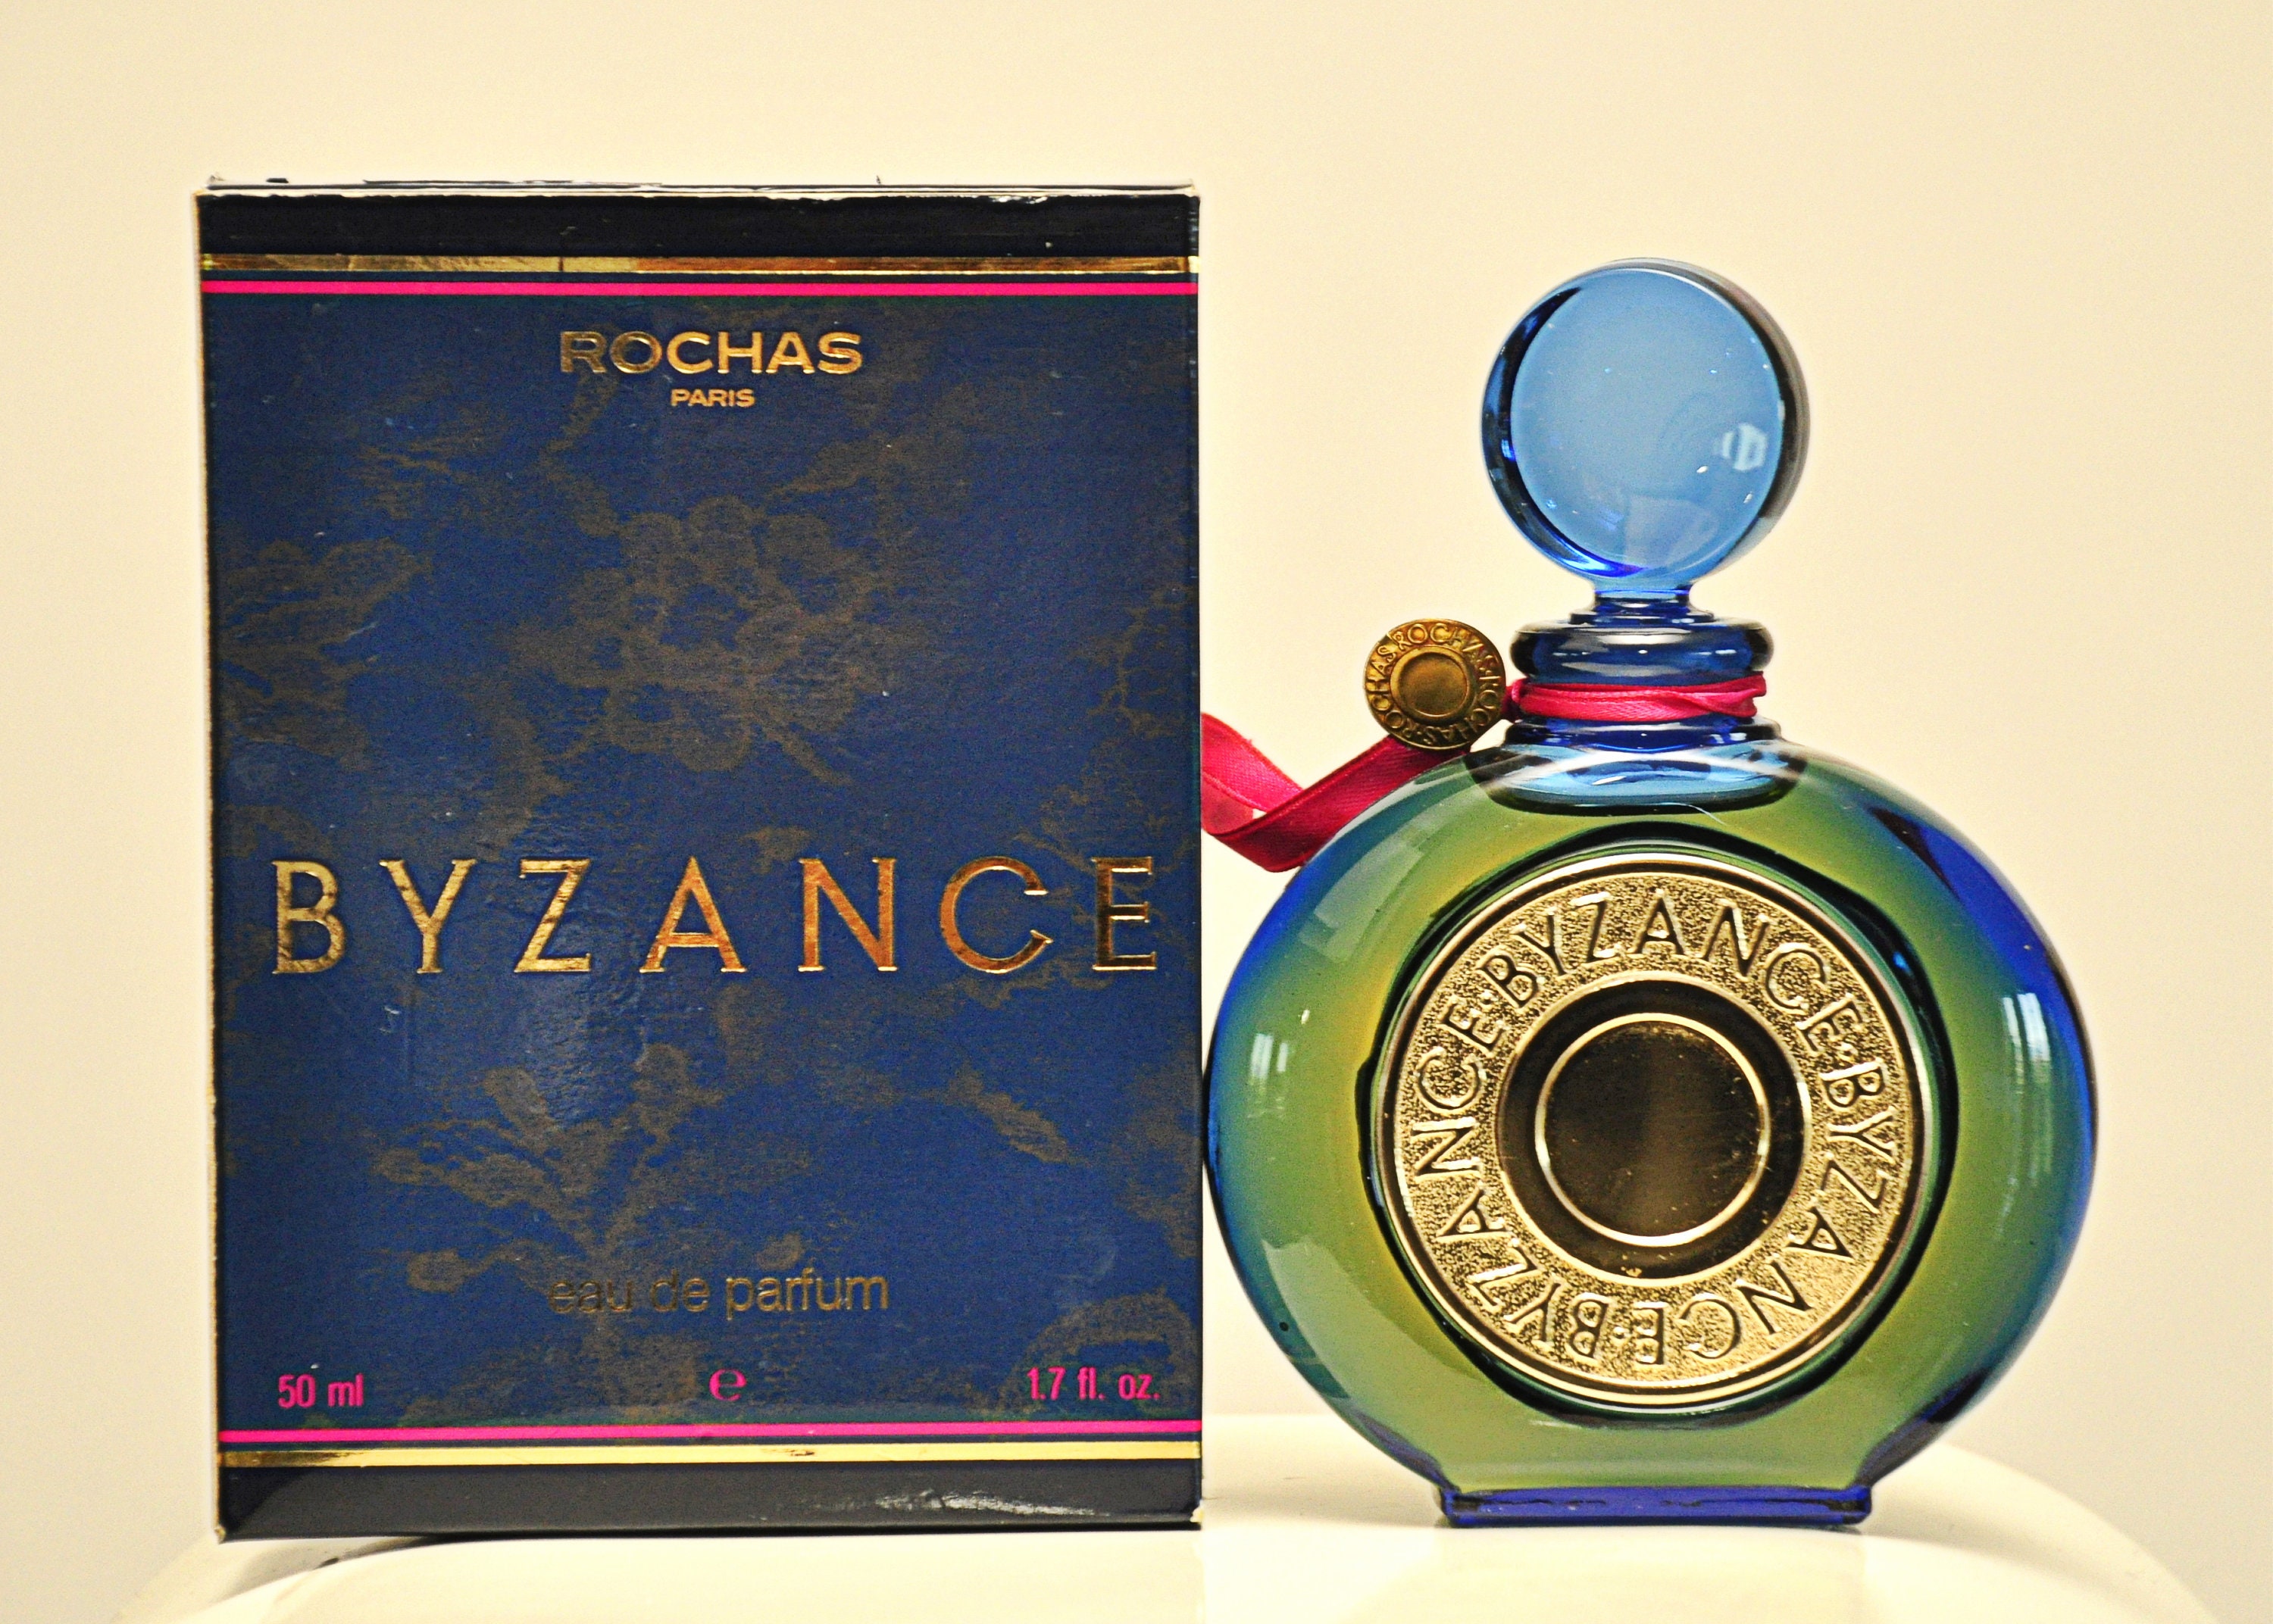 Rochas Byzance Eau De Parfum Edp 50ml 1.7 Fl. Oz. Splash Not - Etsy UK